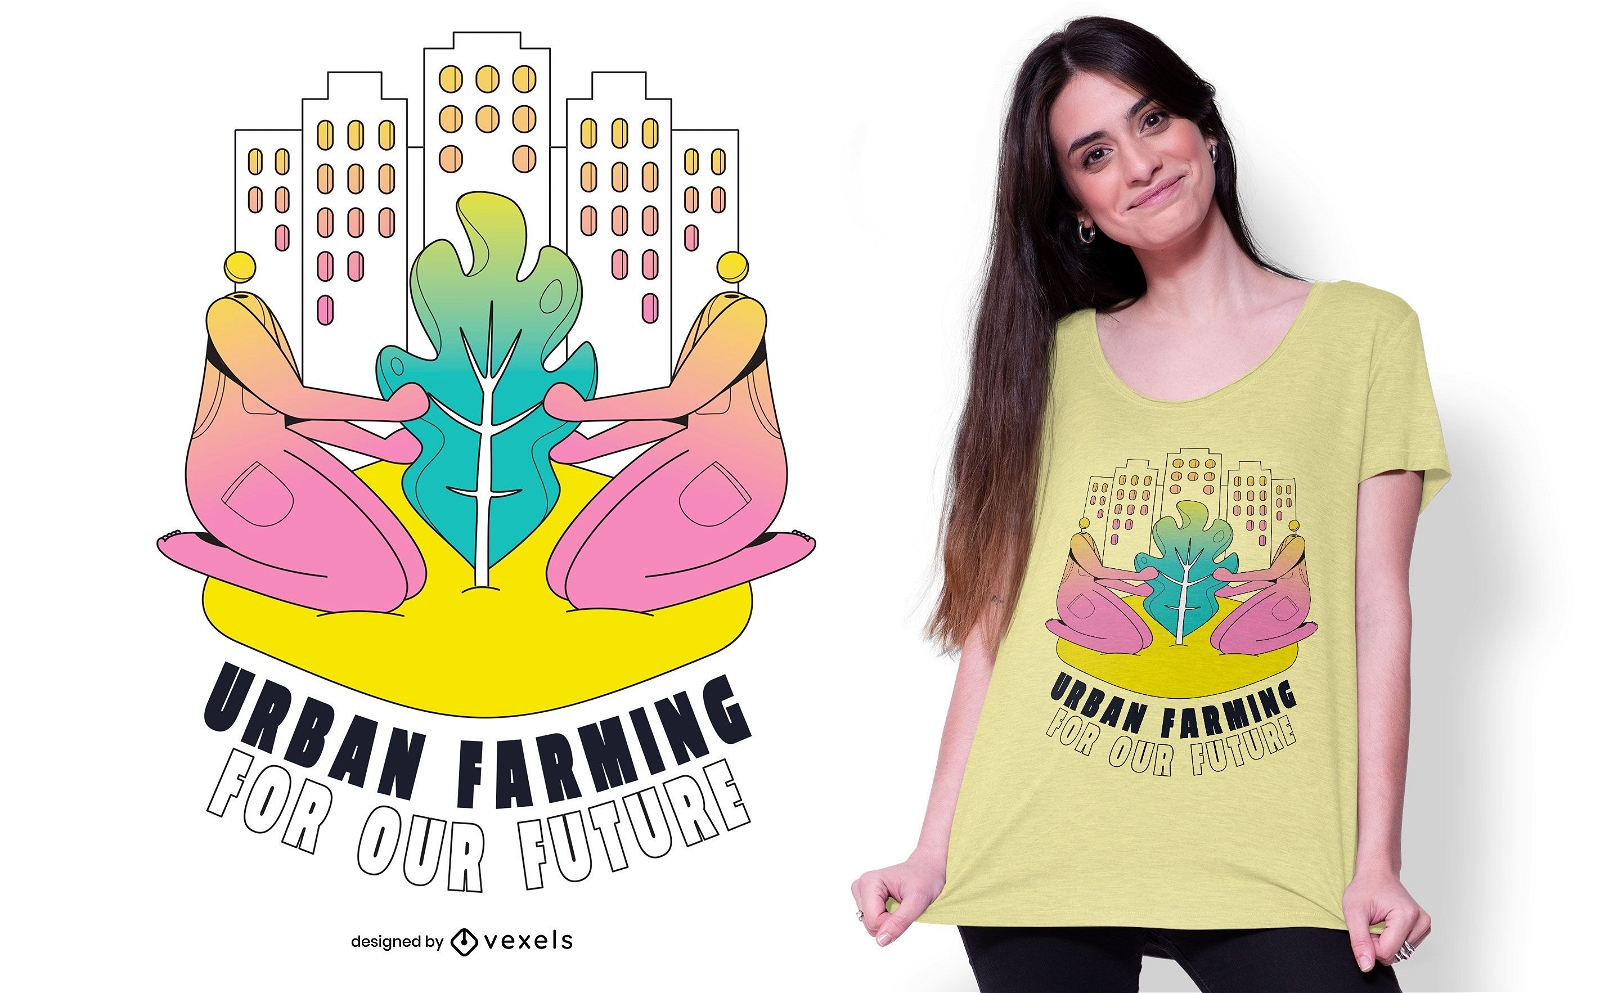 Urban farming quote t-shirt design